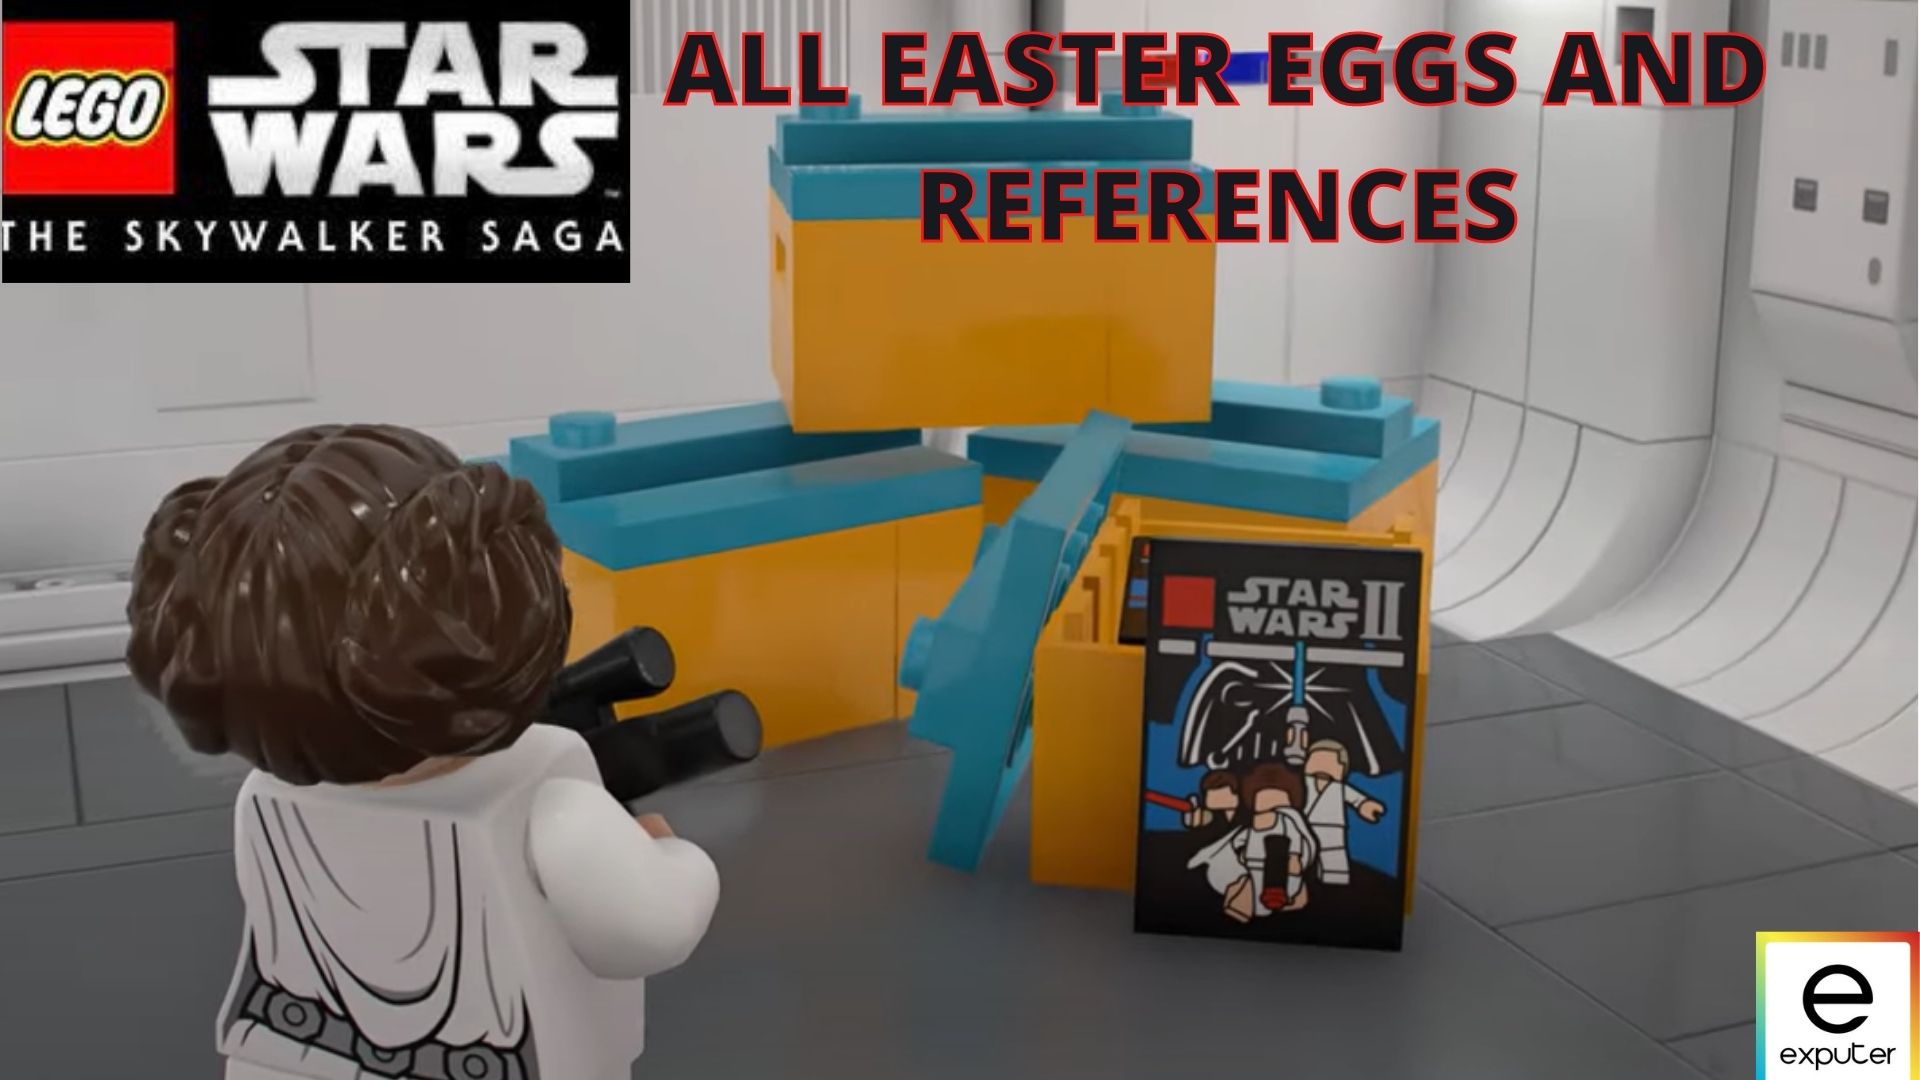 Easter eggs lego star wars skywalker saga